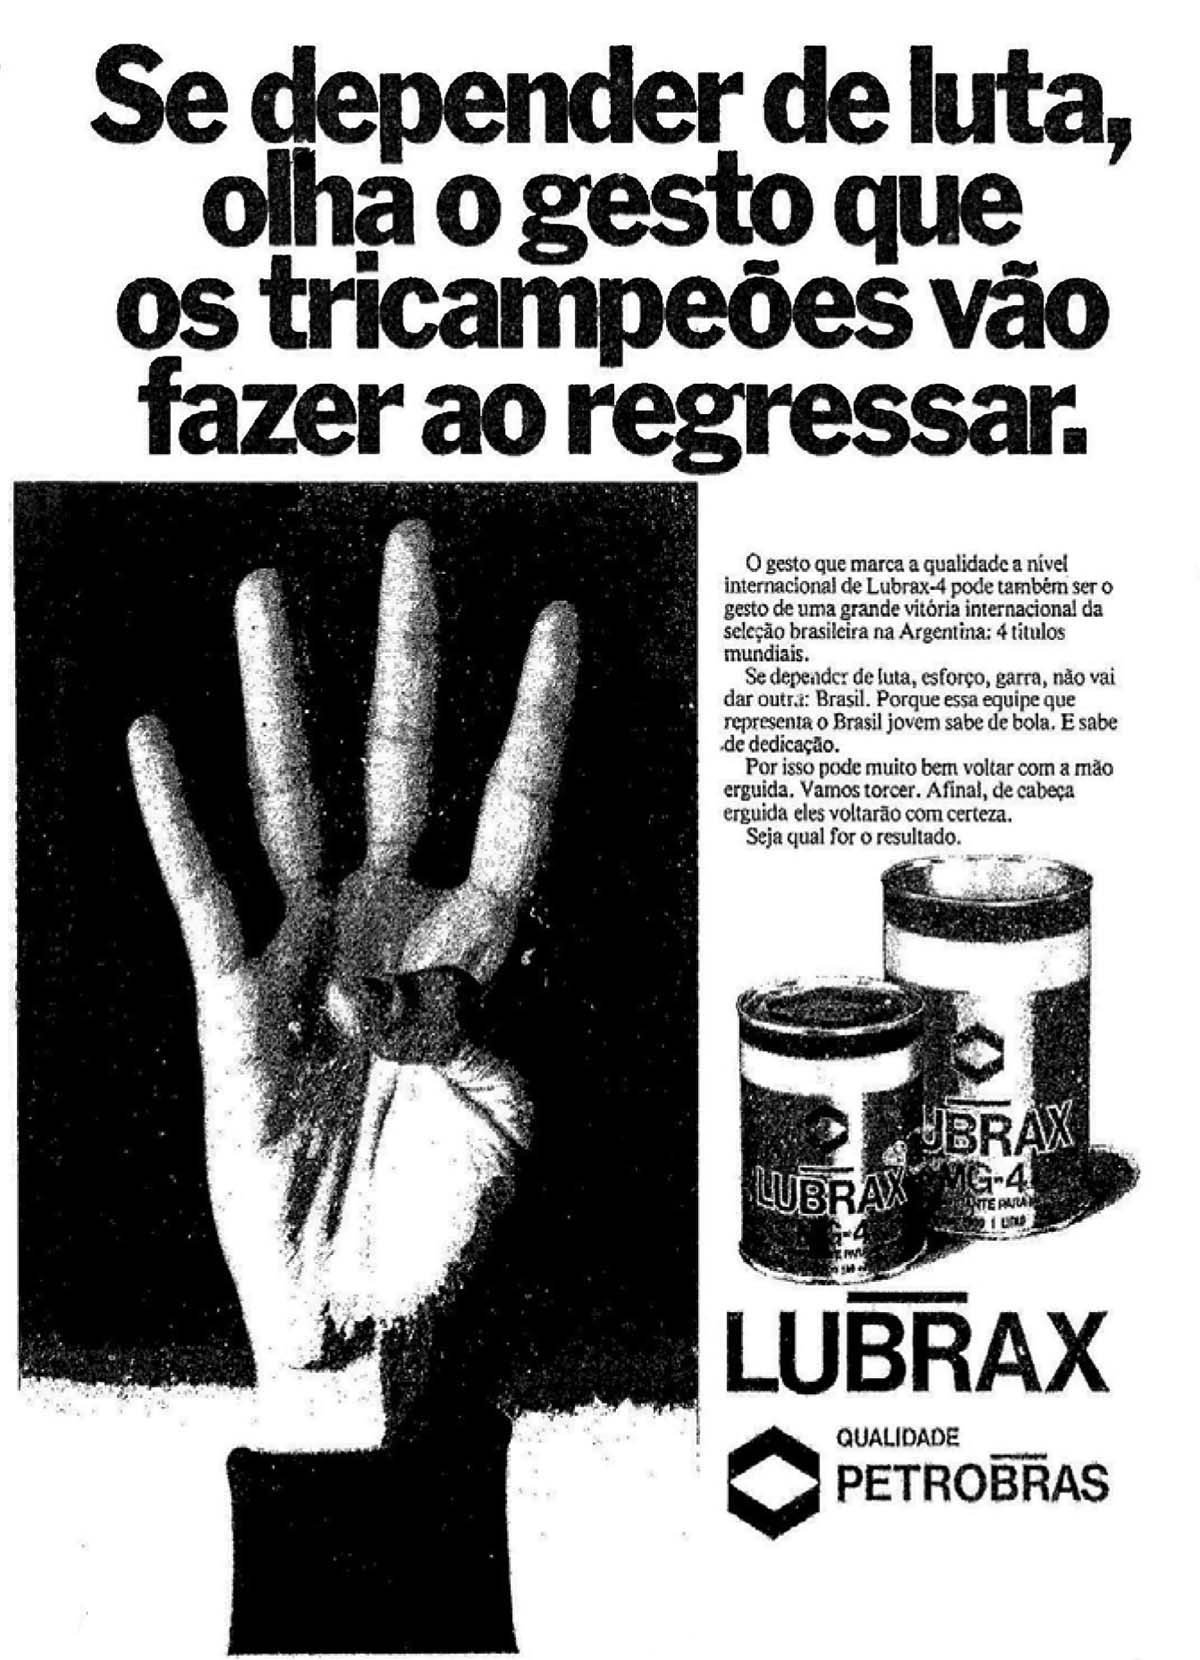 Almap para Lubrax 4 da Petrobras: 'Se depender de luta' 